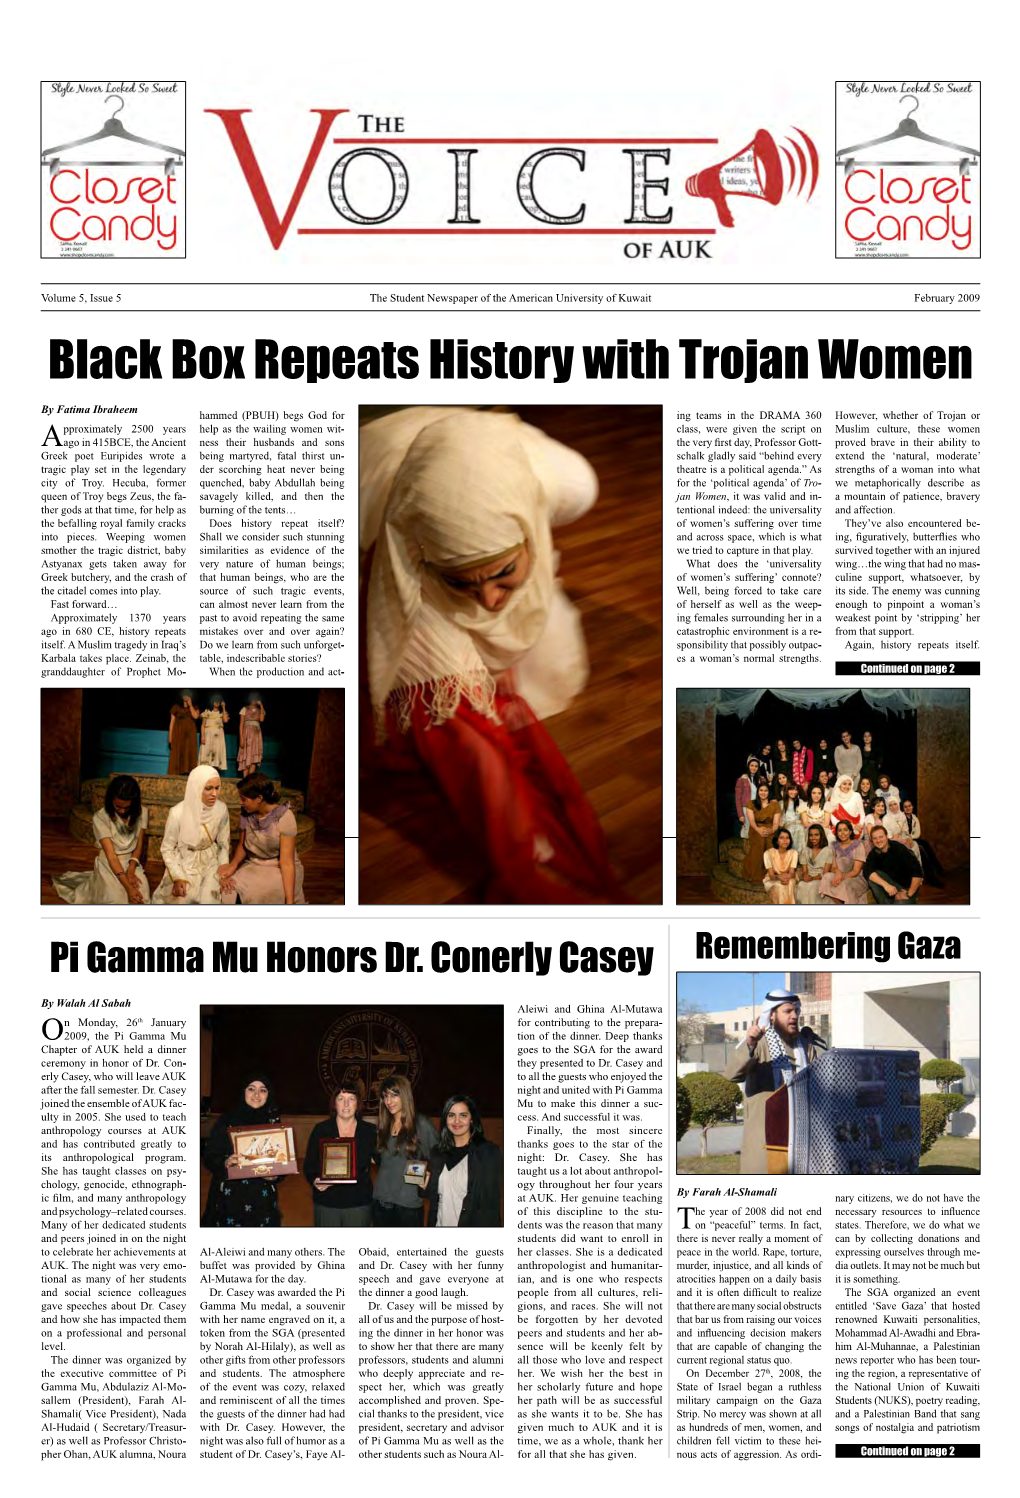 Black Box Repeats History with Trojan Women